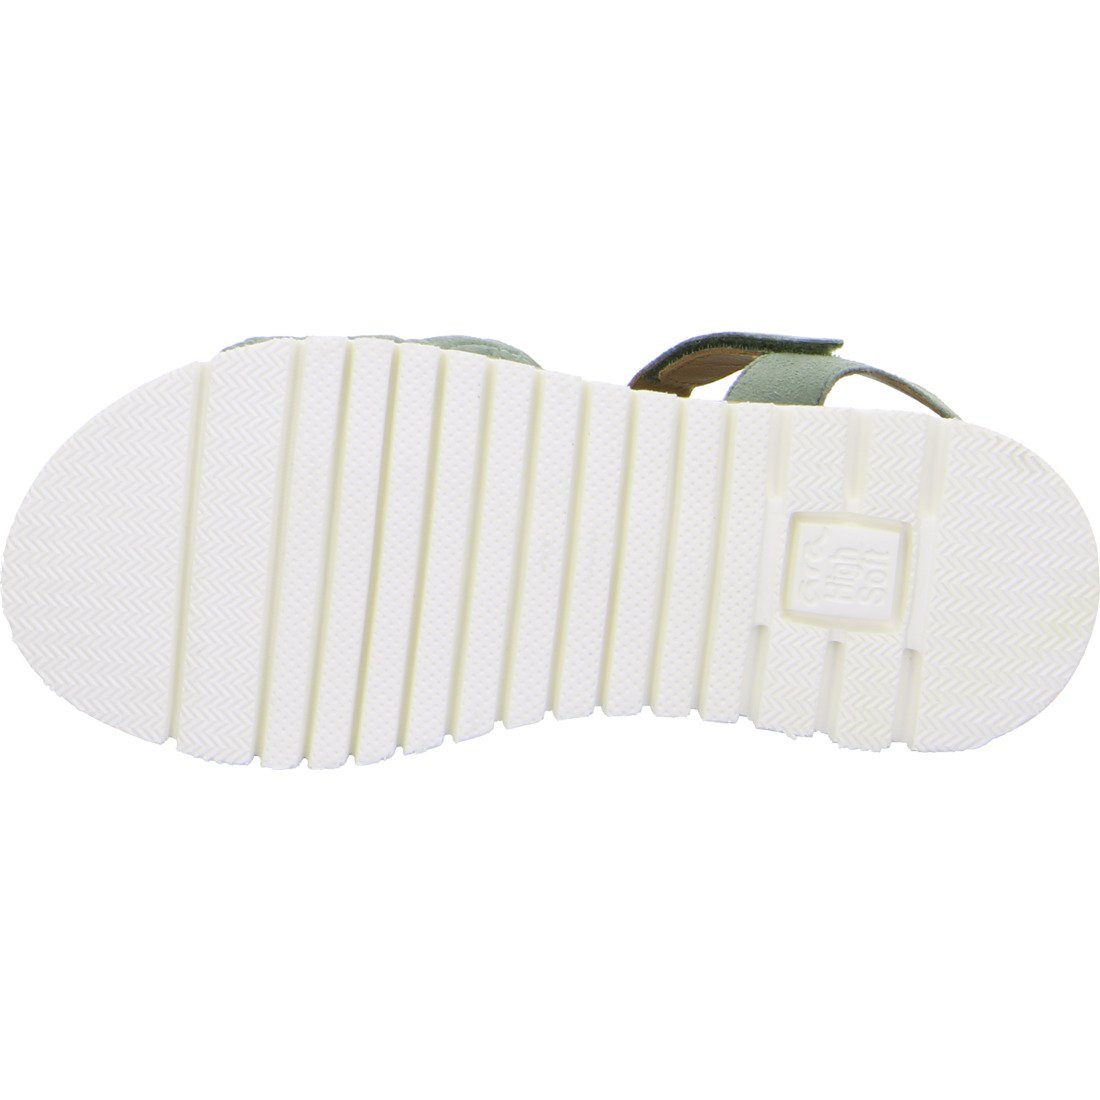 Ara Ara grün Kent-Sport Rauleder Sandalette - Schuhe, 048040 Sandalette